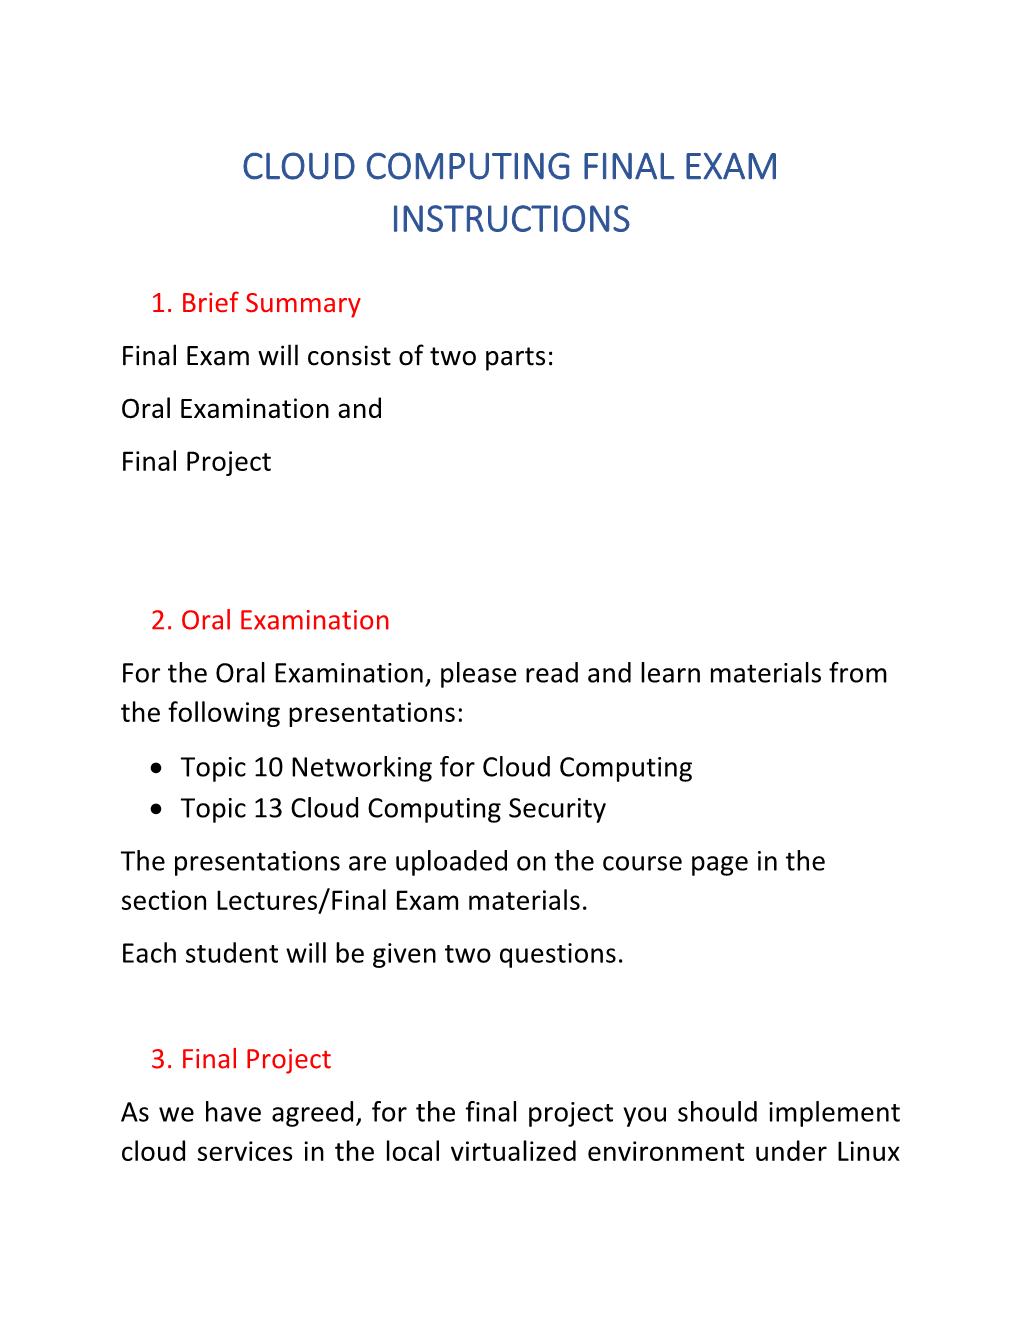 Cloud Computing Final Exam Instructions